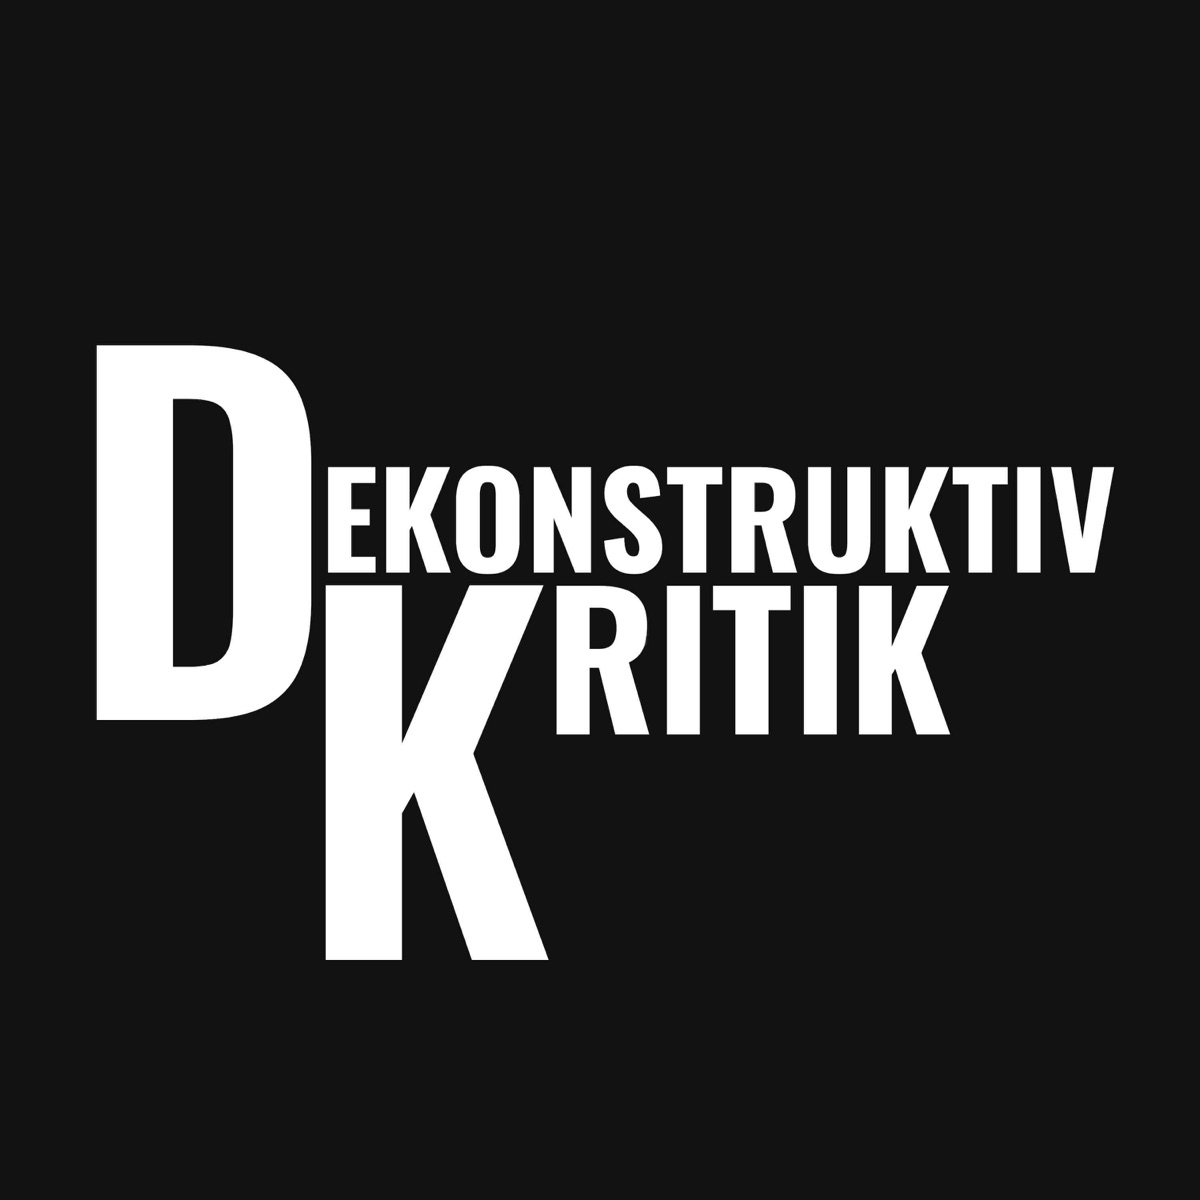 Jens Ganman featuring Chang Frick Vs #DEKONSTRUKTIVKRITIK